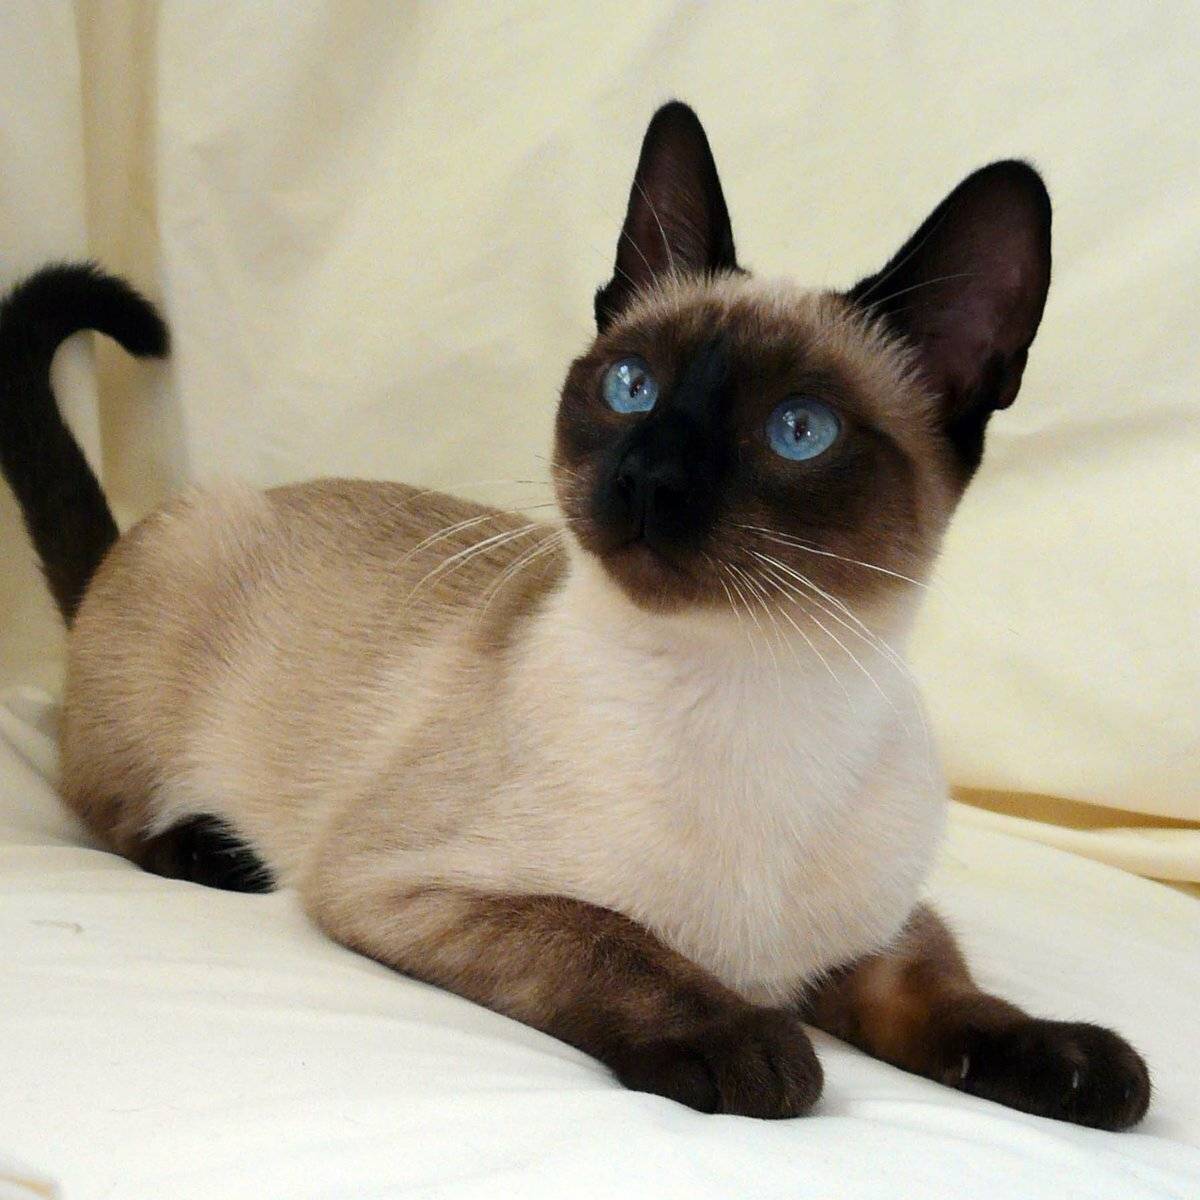 Cиамская кошка - характер породы, фото